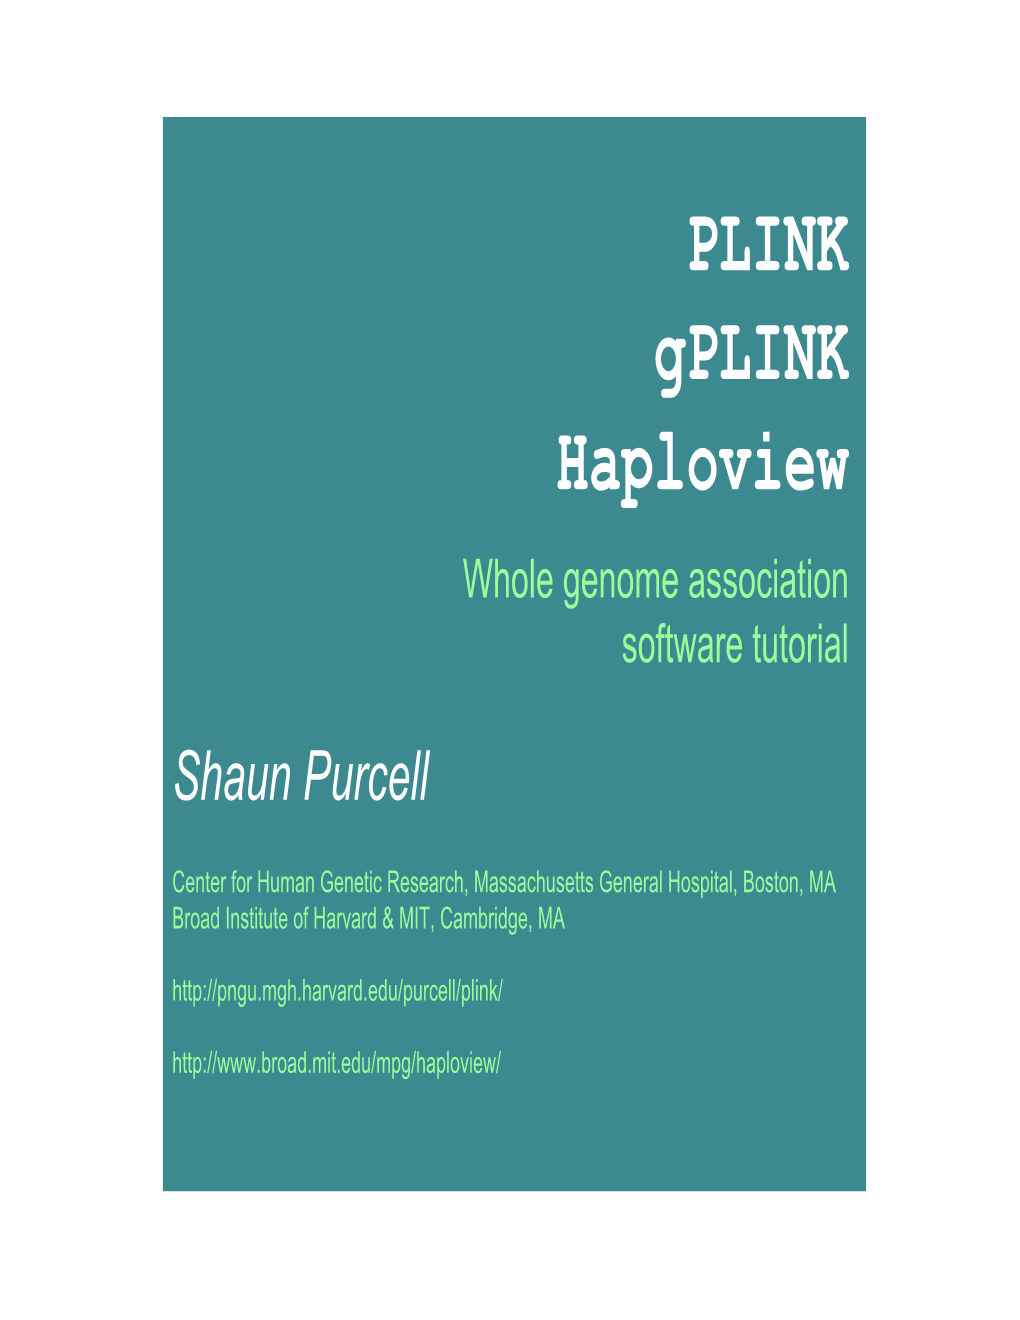 PLINK Gplink Haploview Whole Genome Association Software Tutorial